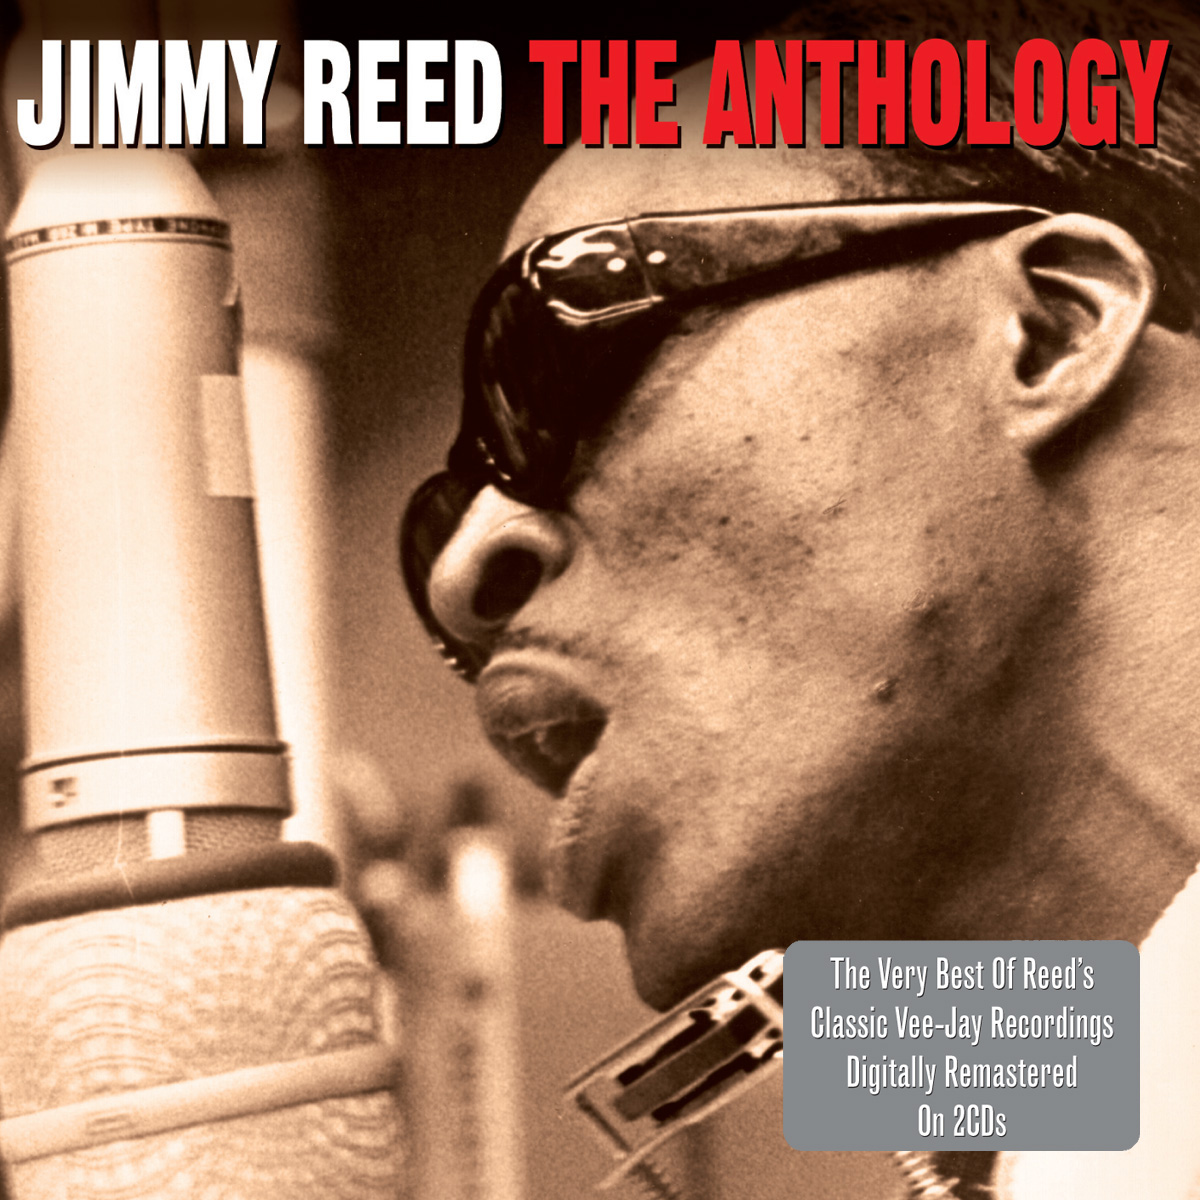 JIMMY REED – THE ANTHOLOGY 

NOT2CD414 - 2CD SET

#NOT2CD414 #2CD #Blues #JimmyReed #NotNowMusicLtd

Available now at:
amazon.co.uk/Anthology-Jimm…